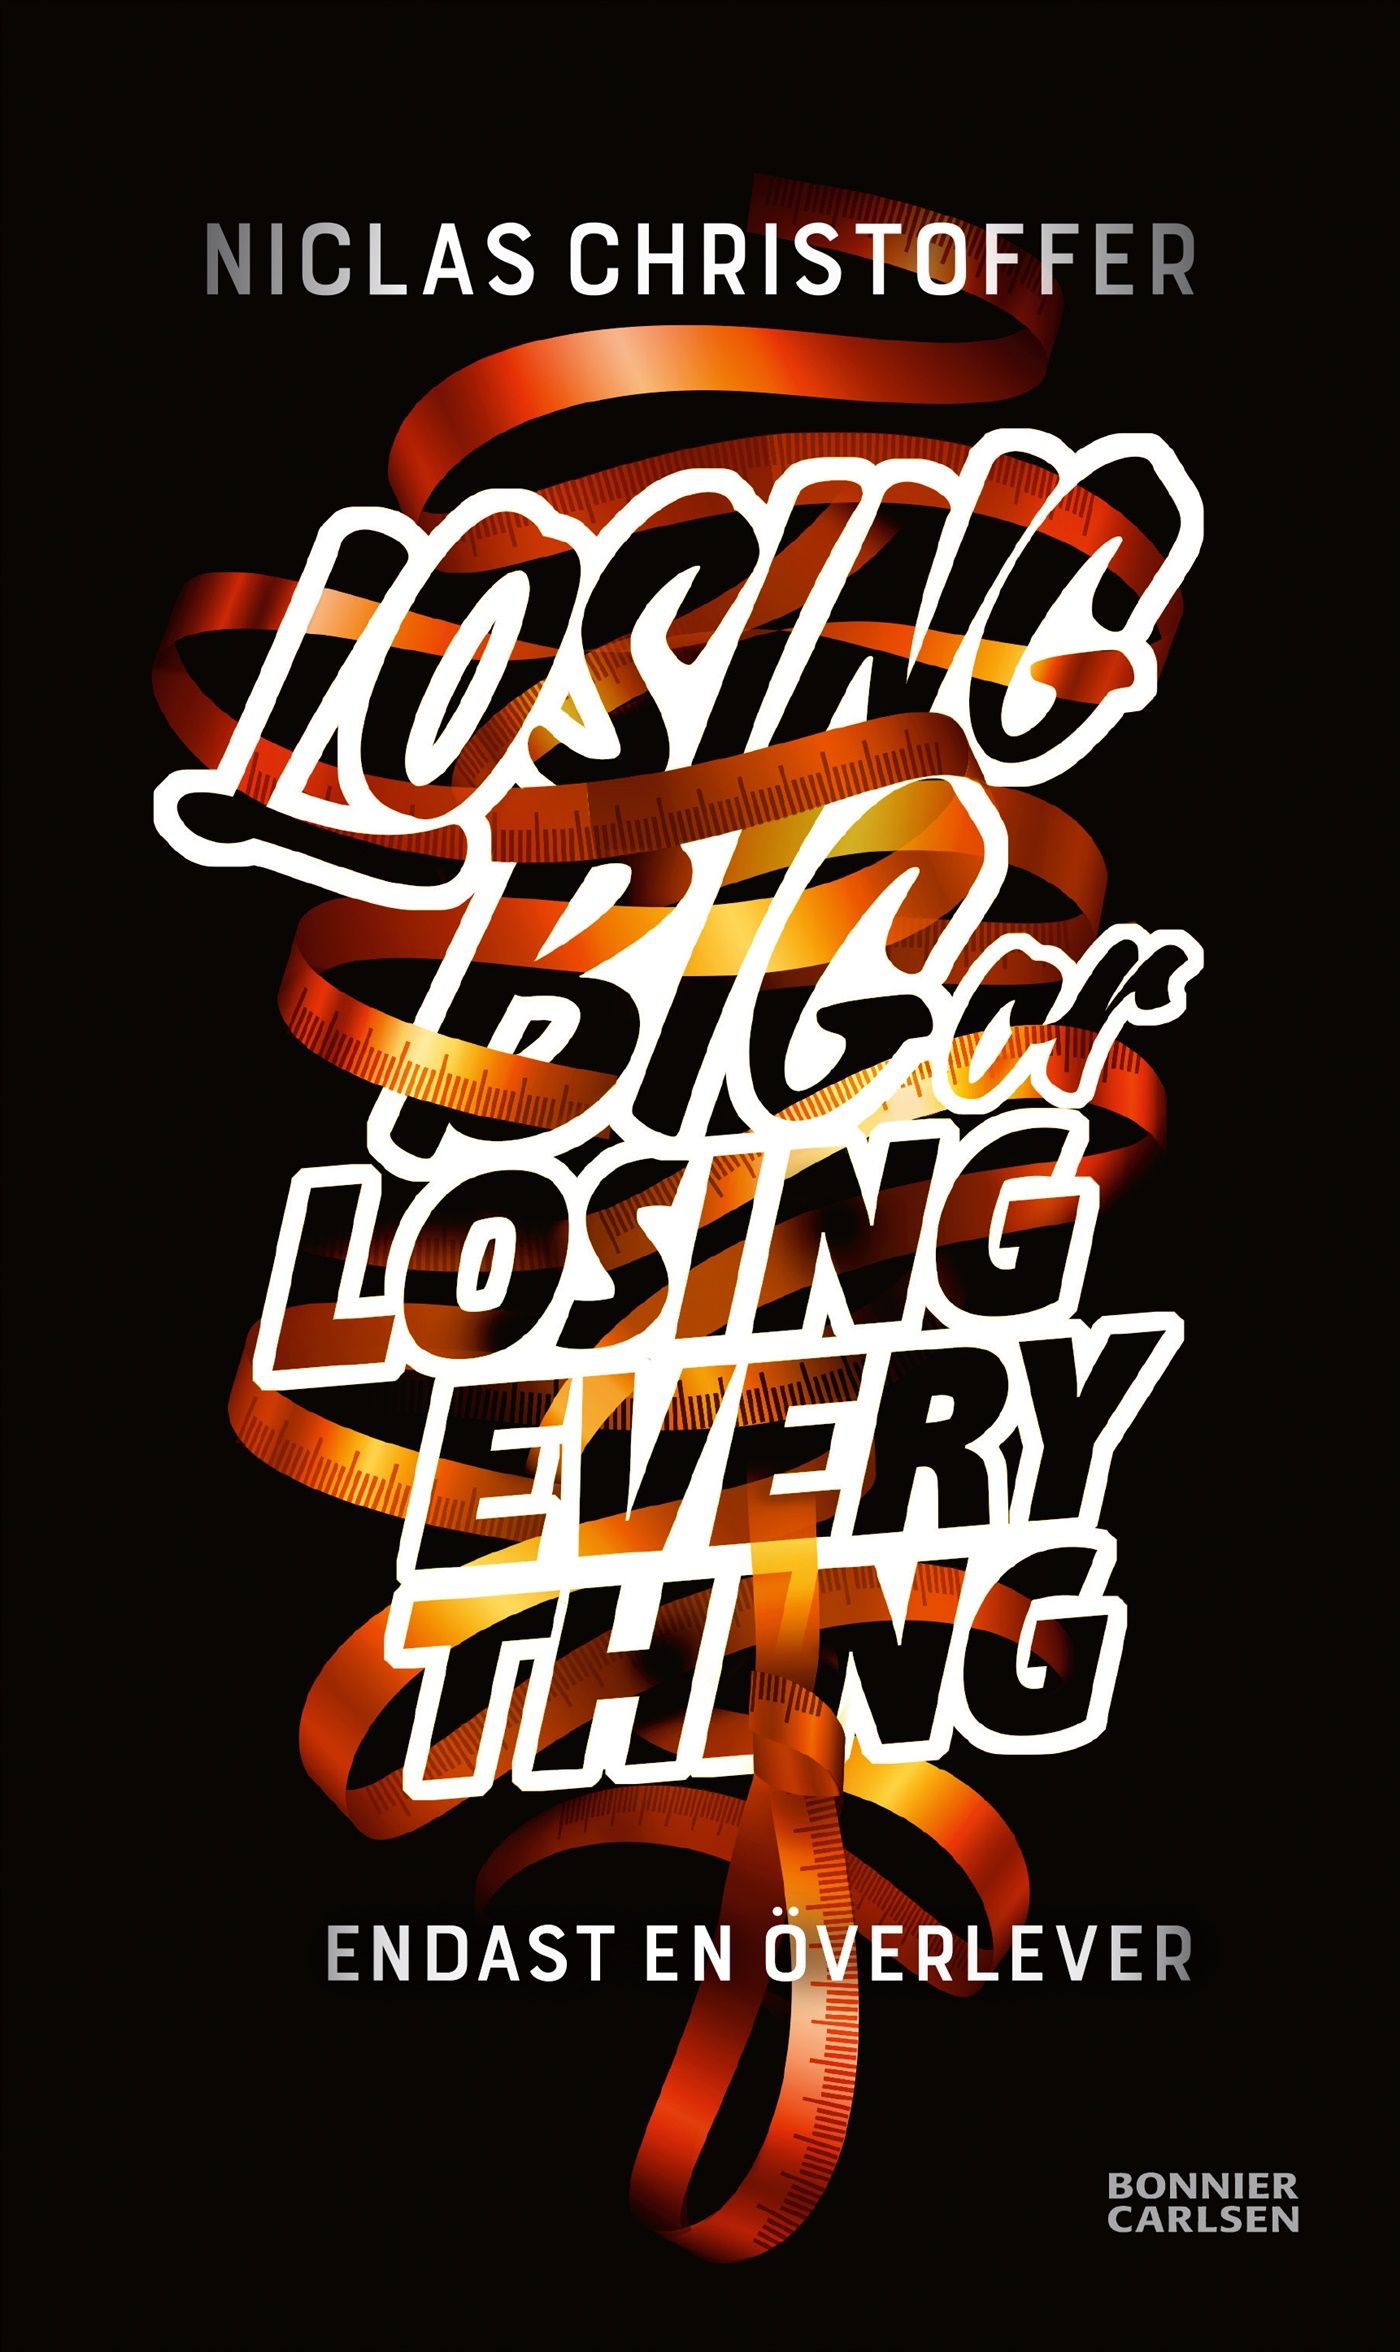 Losing big or losing everything, e-bok av Niclas Christoffer